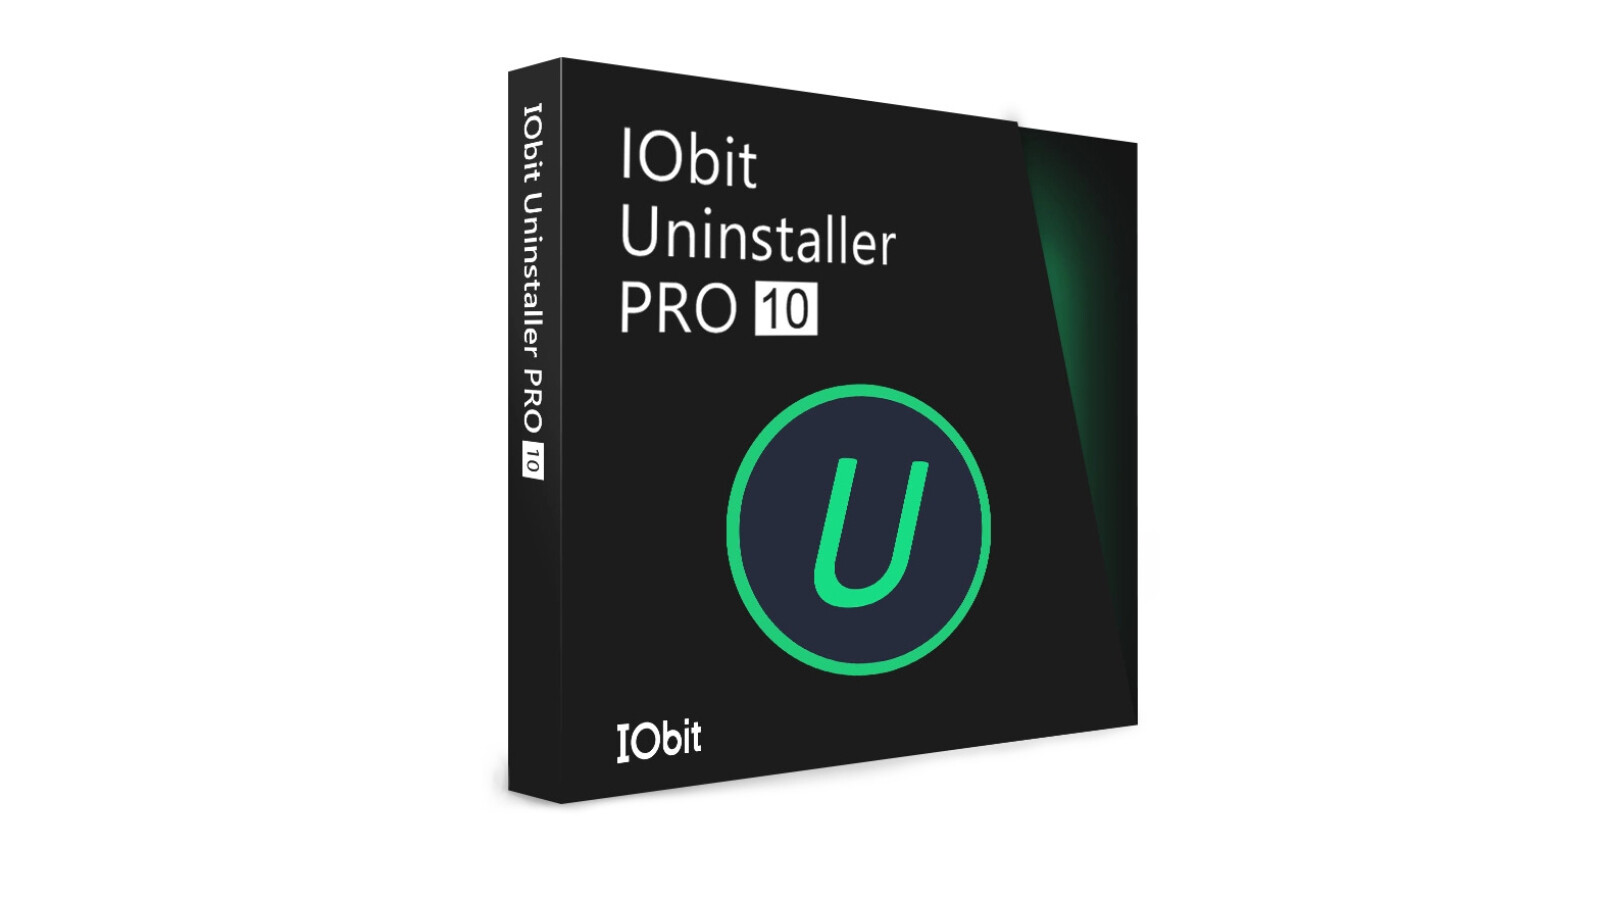 iobit uninstaller 8.4 key